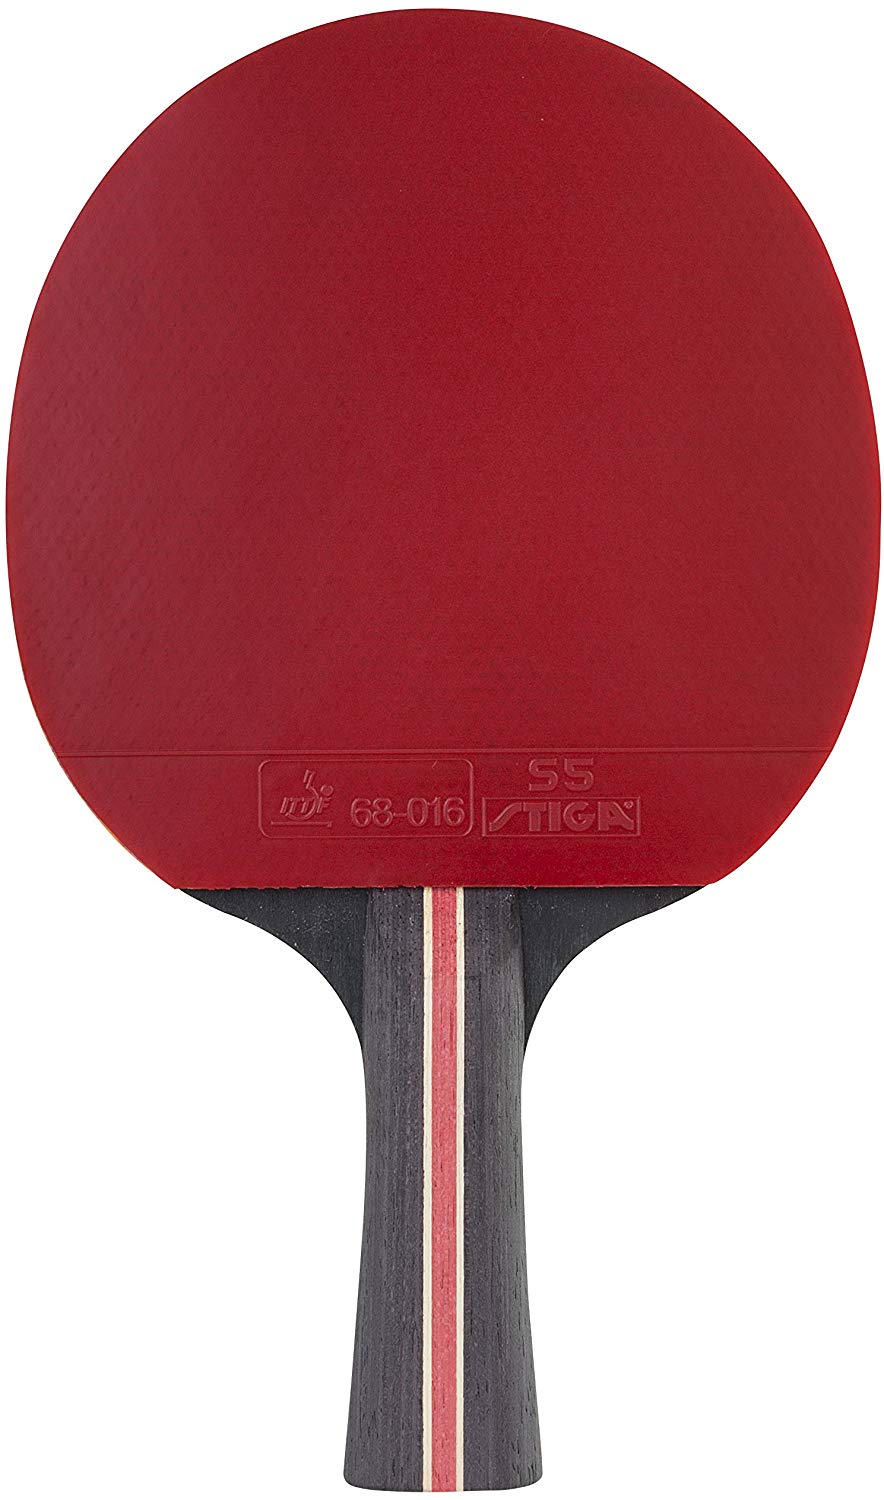 Stiga Flexure 5 Star Table Tennis Pad - image 2 of 4